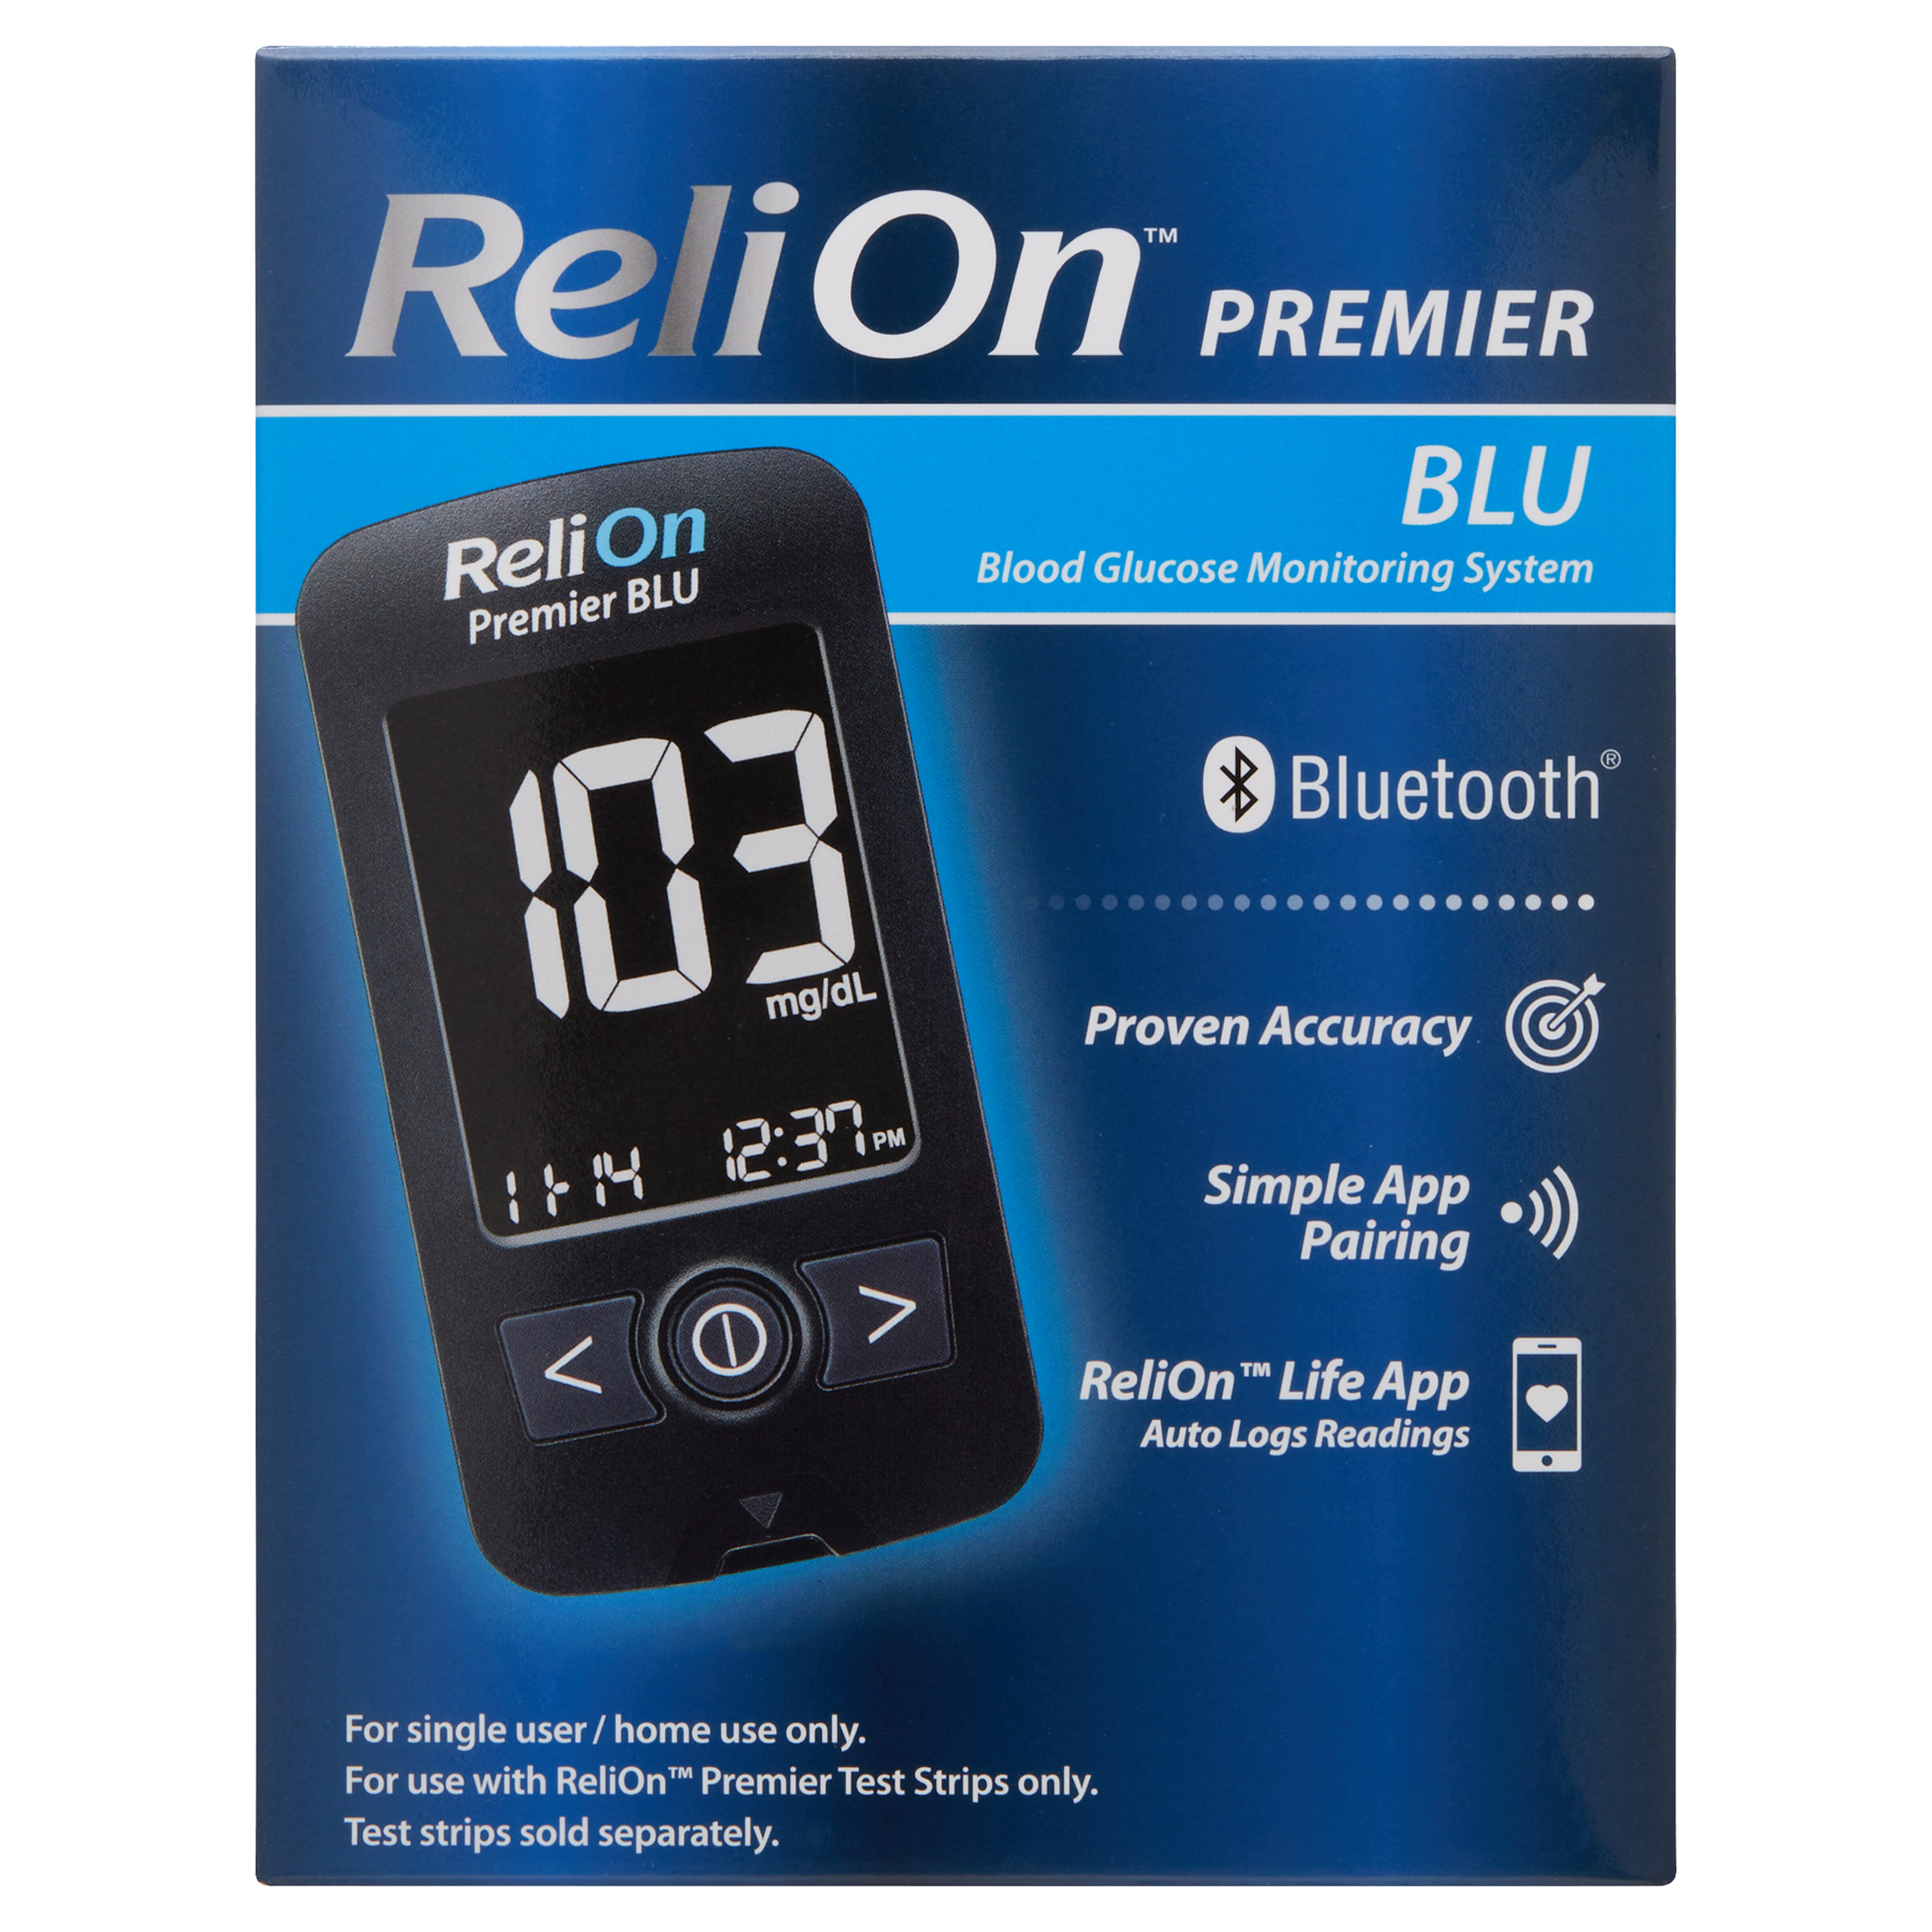 ReliOn Premier BLU Blood Glucose Monitoring System - image 1 of 7